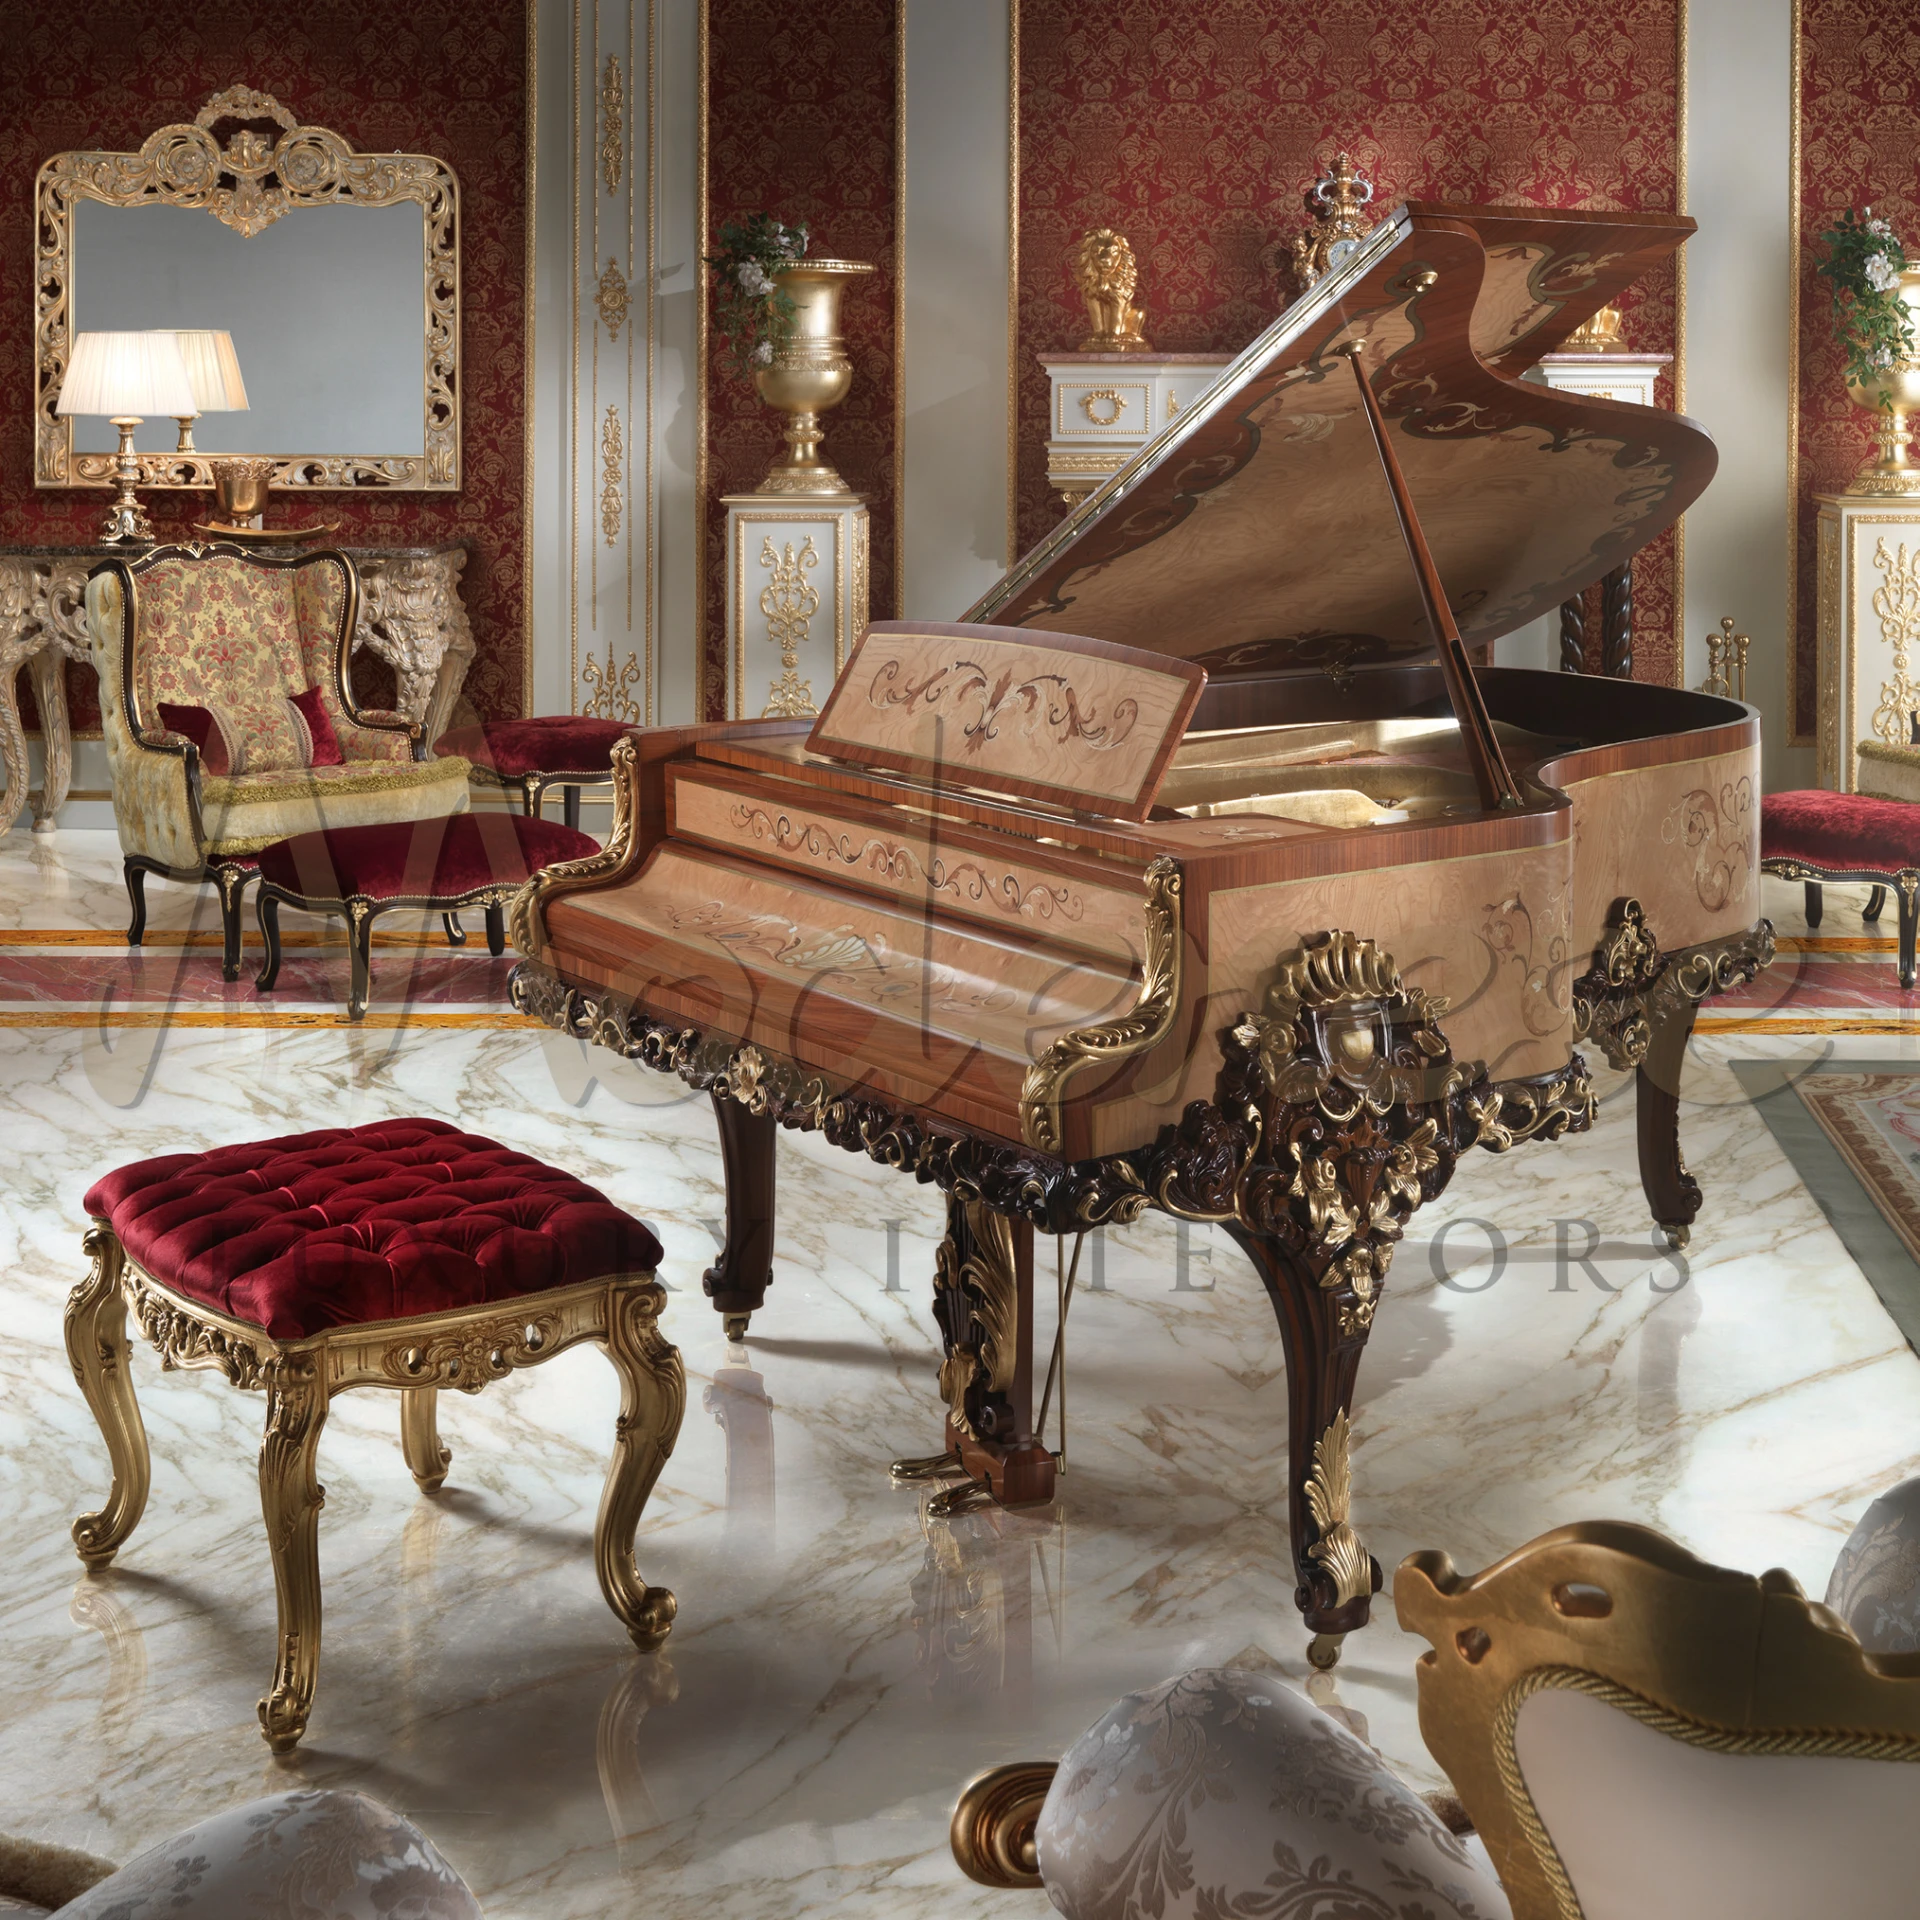 Regal Comfort: Explore Our Capitonné Red Velvet Piano Stool Collection